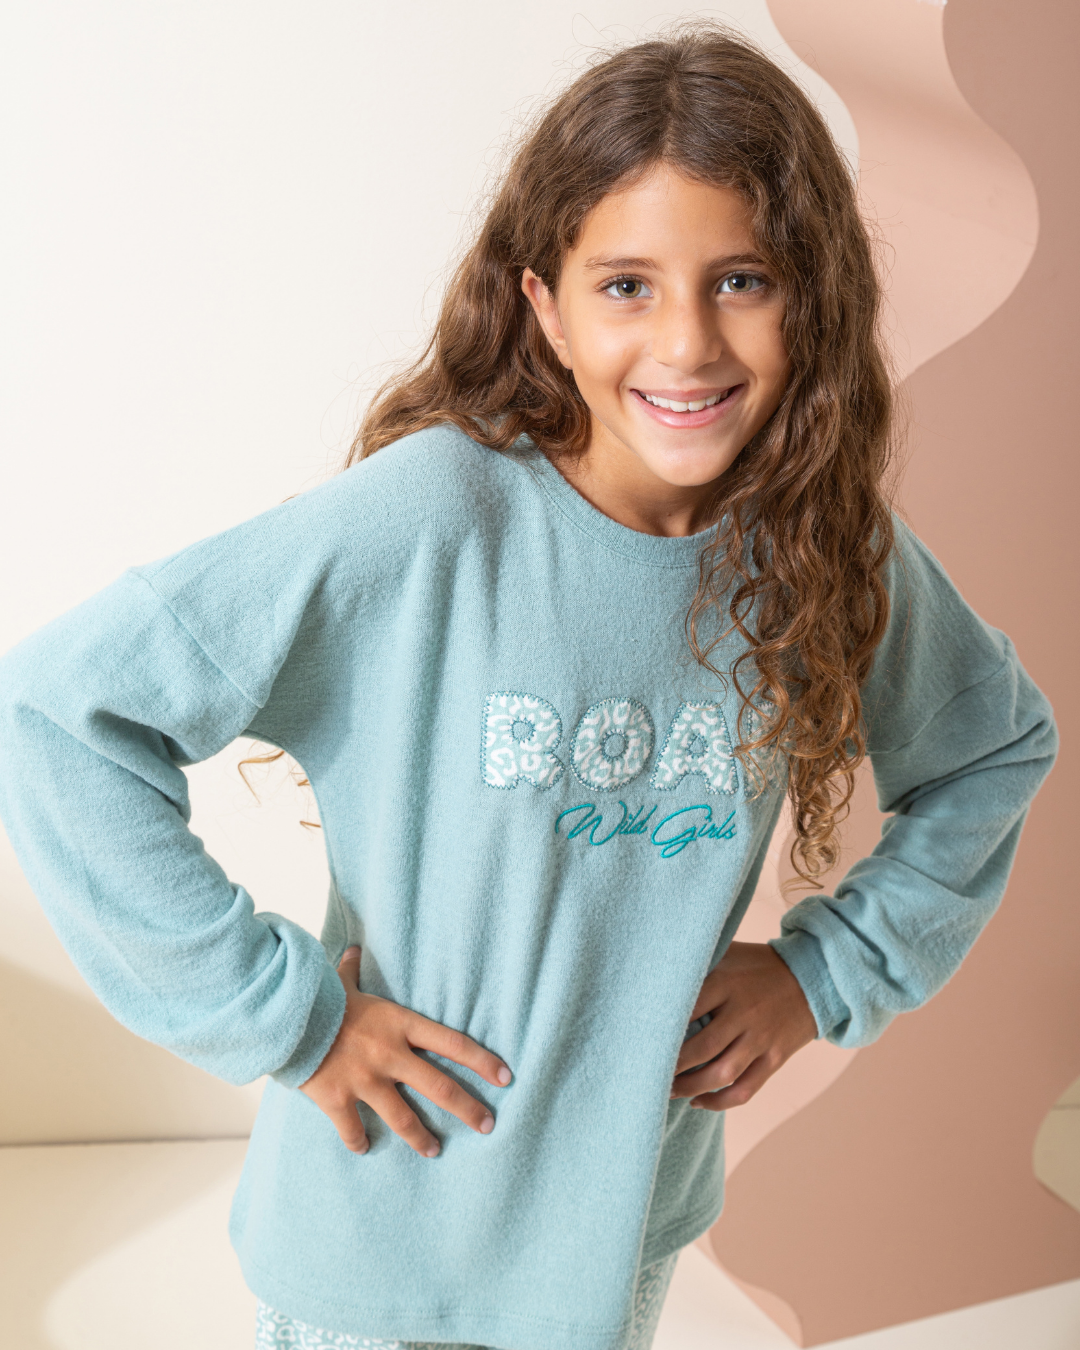 Roar girls' long sleeve pajamas, thermal fabric